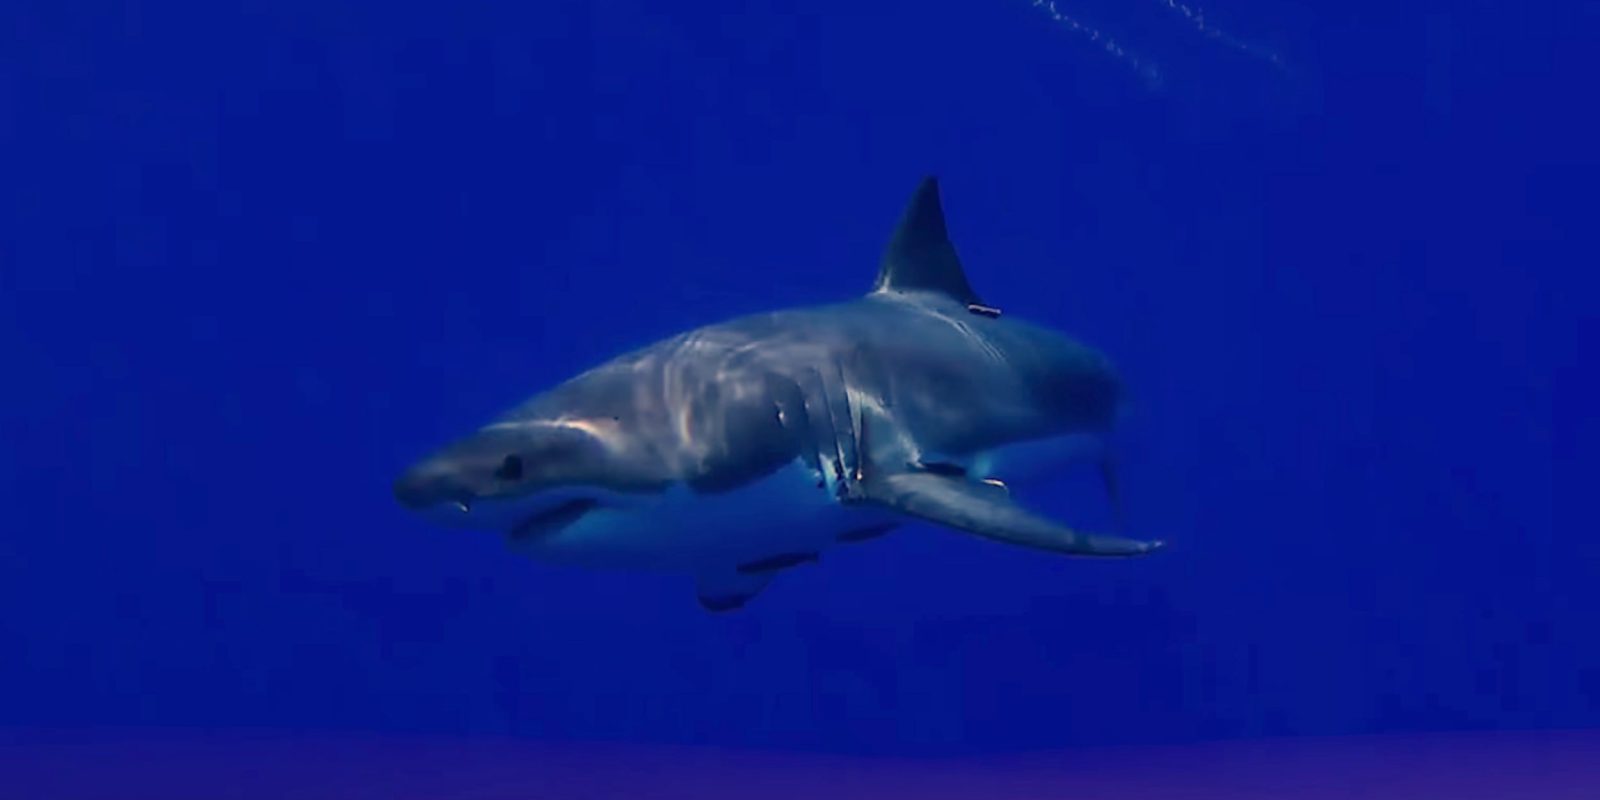 Great white shark attacks Trident submarine drone at Isla de Guadalupe, Mexico [video]